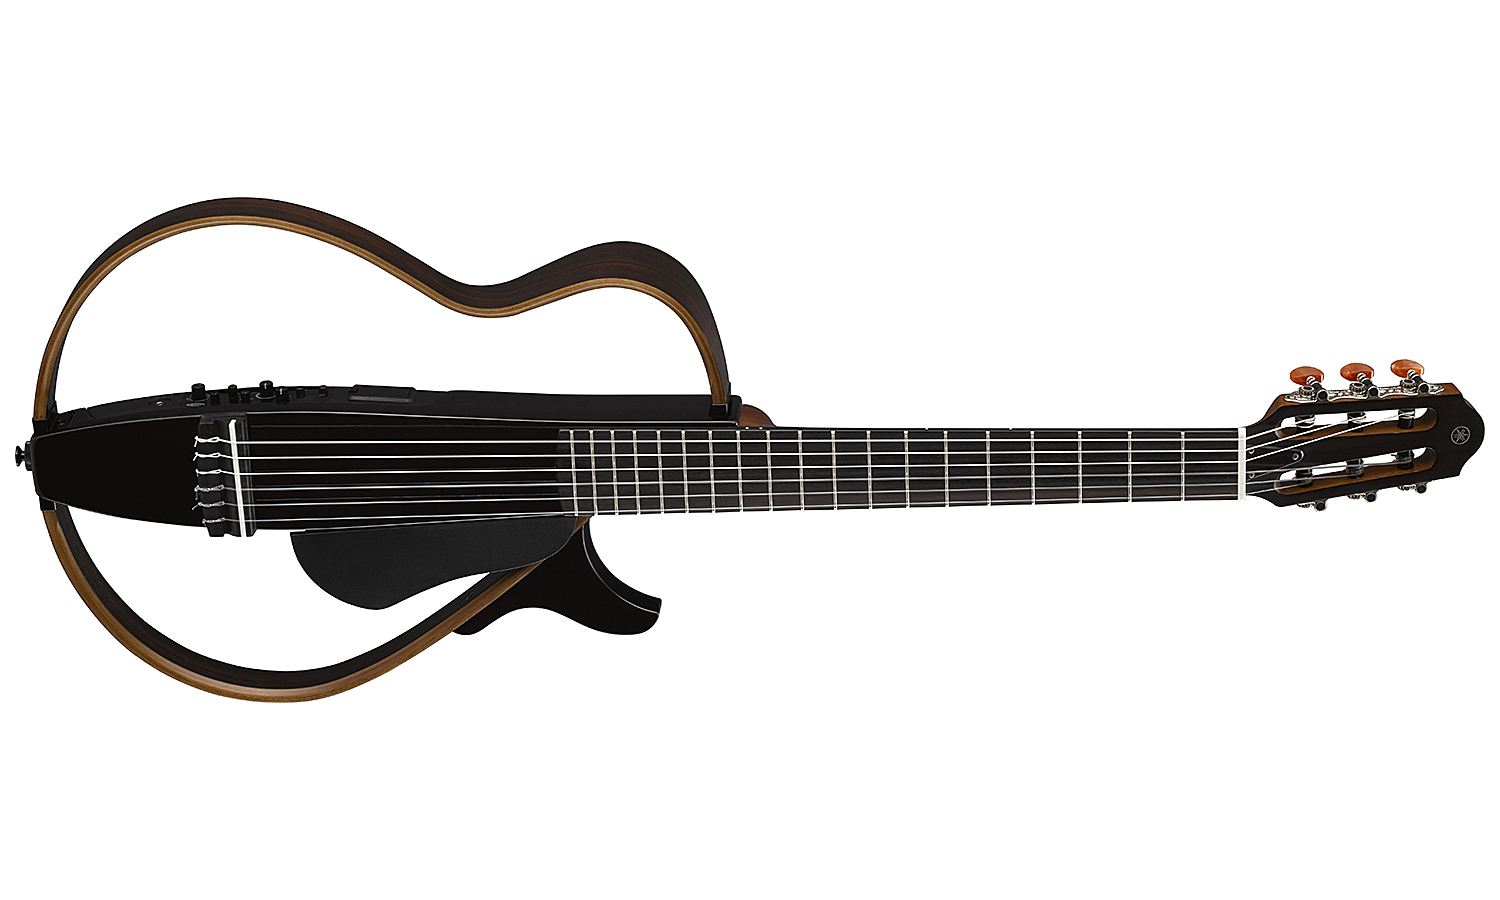 Yamaha Silent Guitar Slg200n - Translucent Black Gloss - Classical guitar 4/4 size - Variation 1